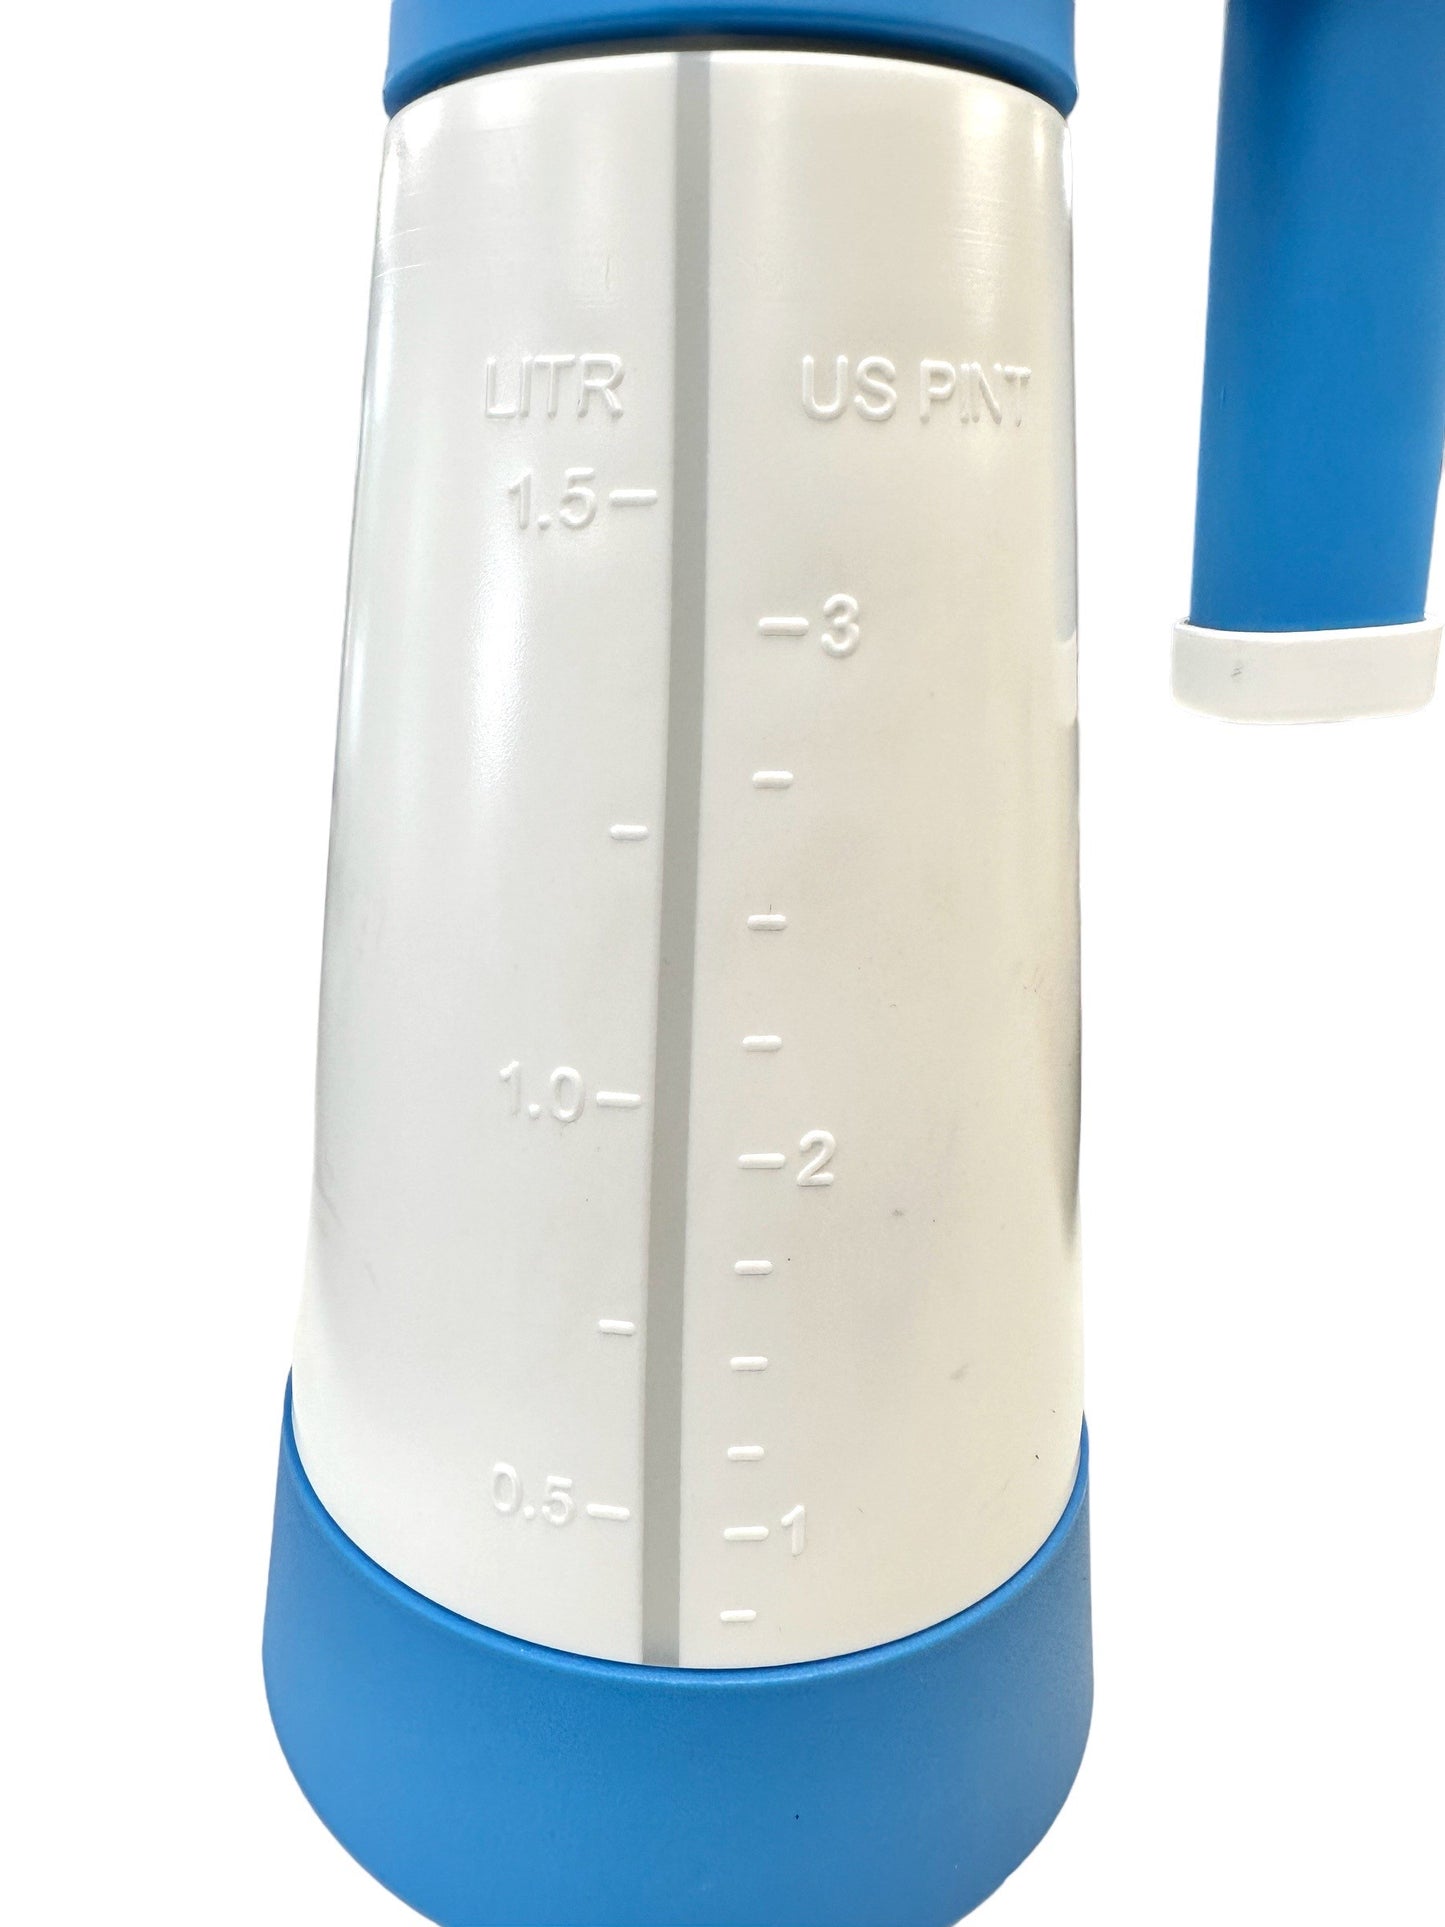 1.5ltr Pump Sprayer Chemical Resistant